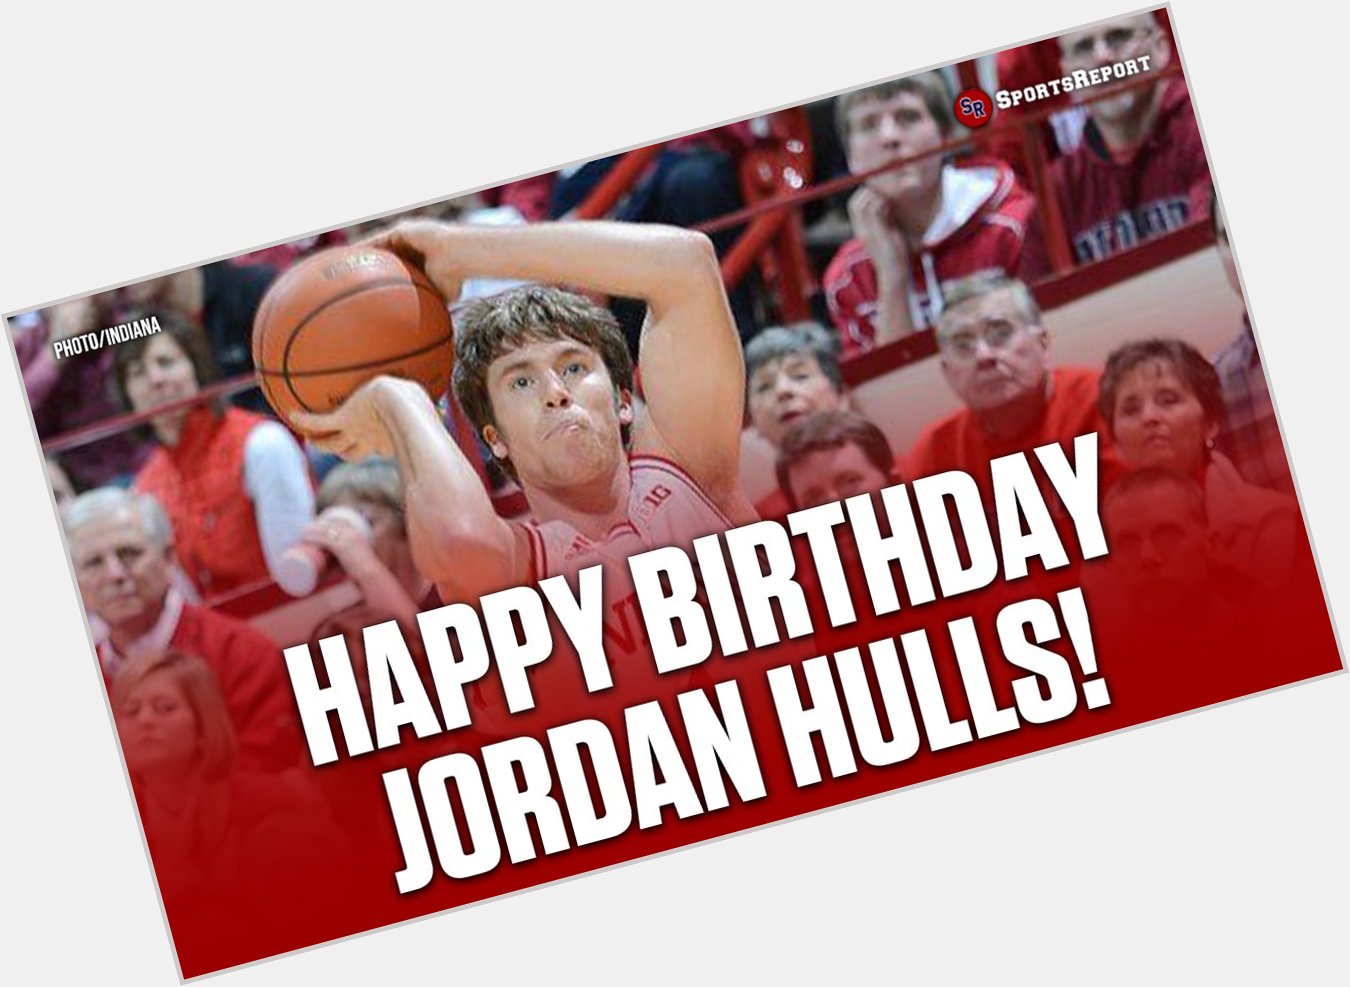  Fans, let\s wish great Jordan Hulls a Happy Birthday! 